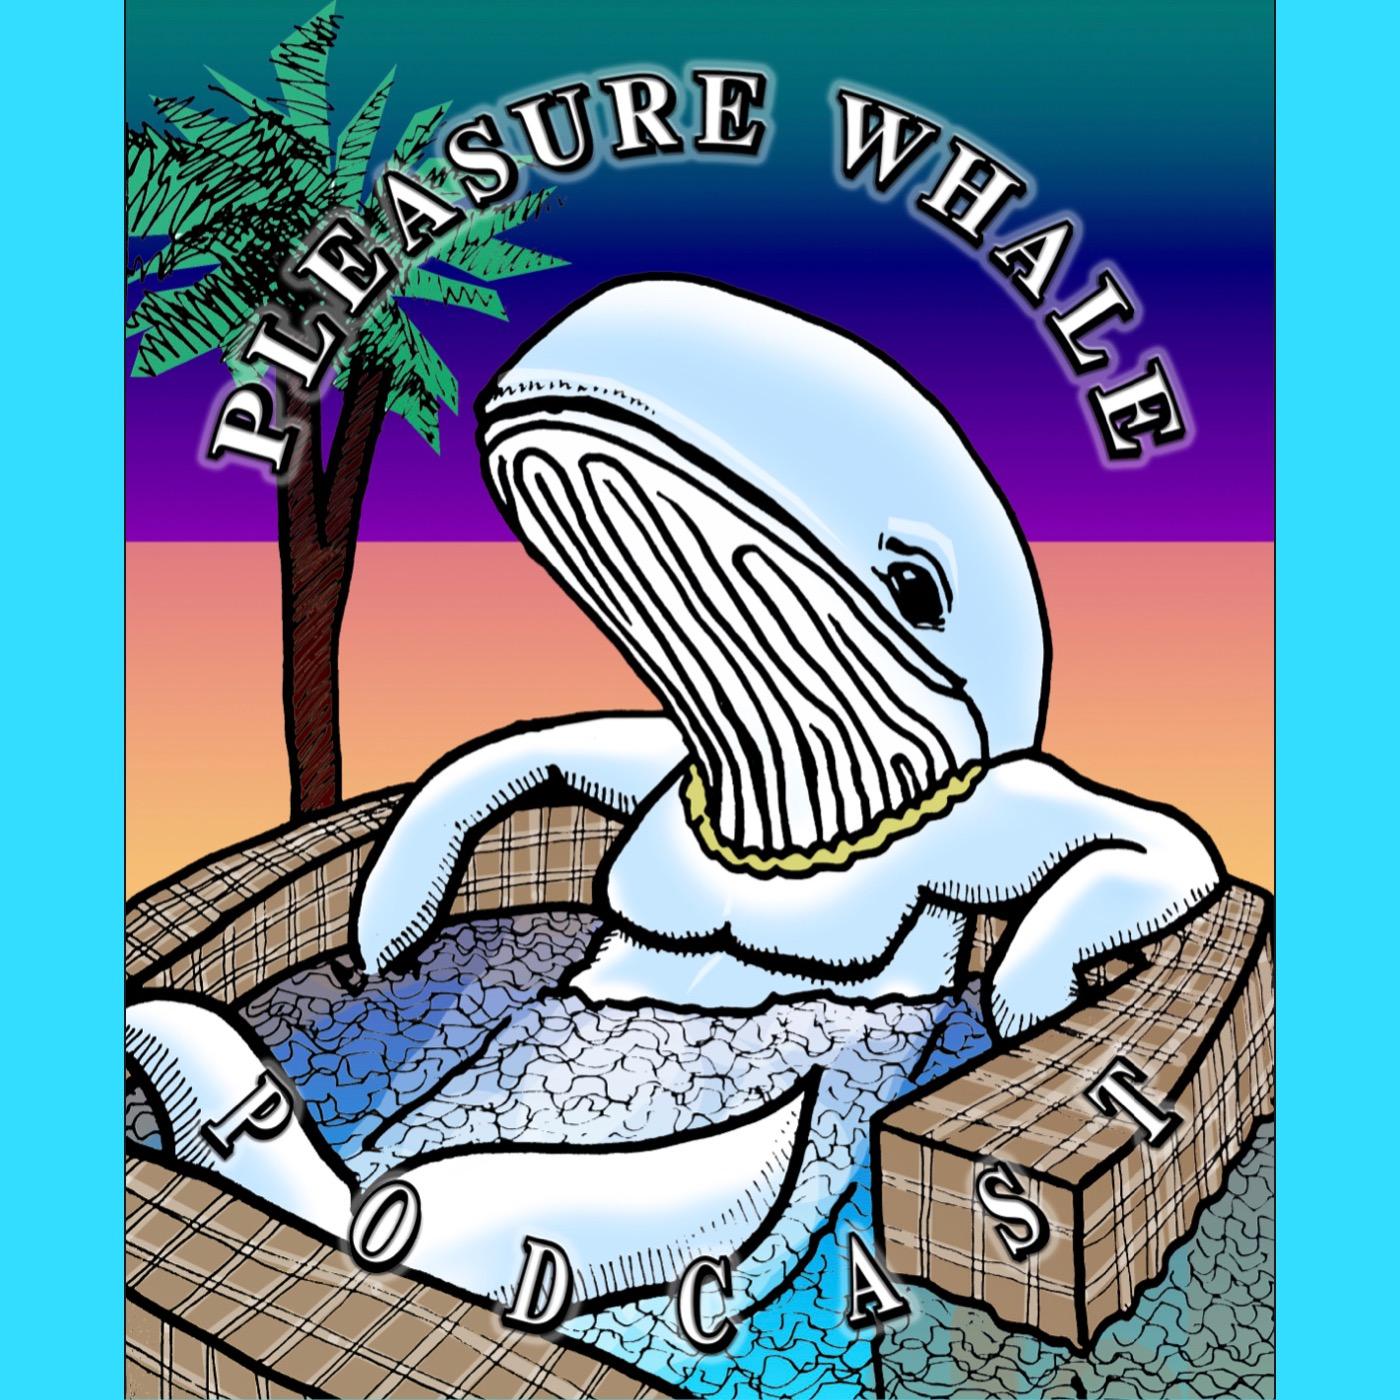 Pleasure Whale